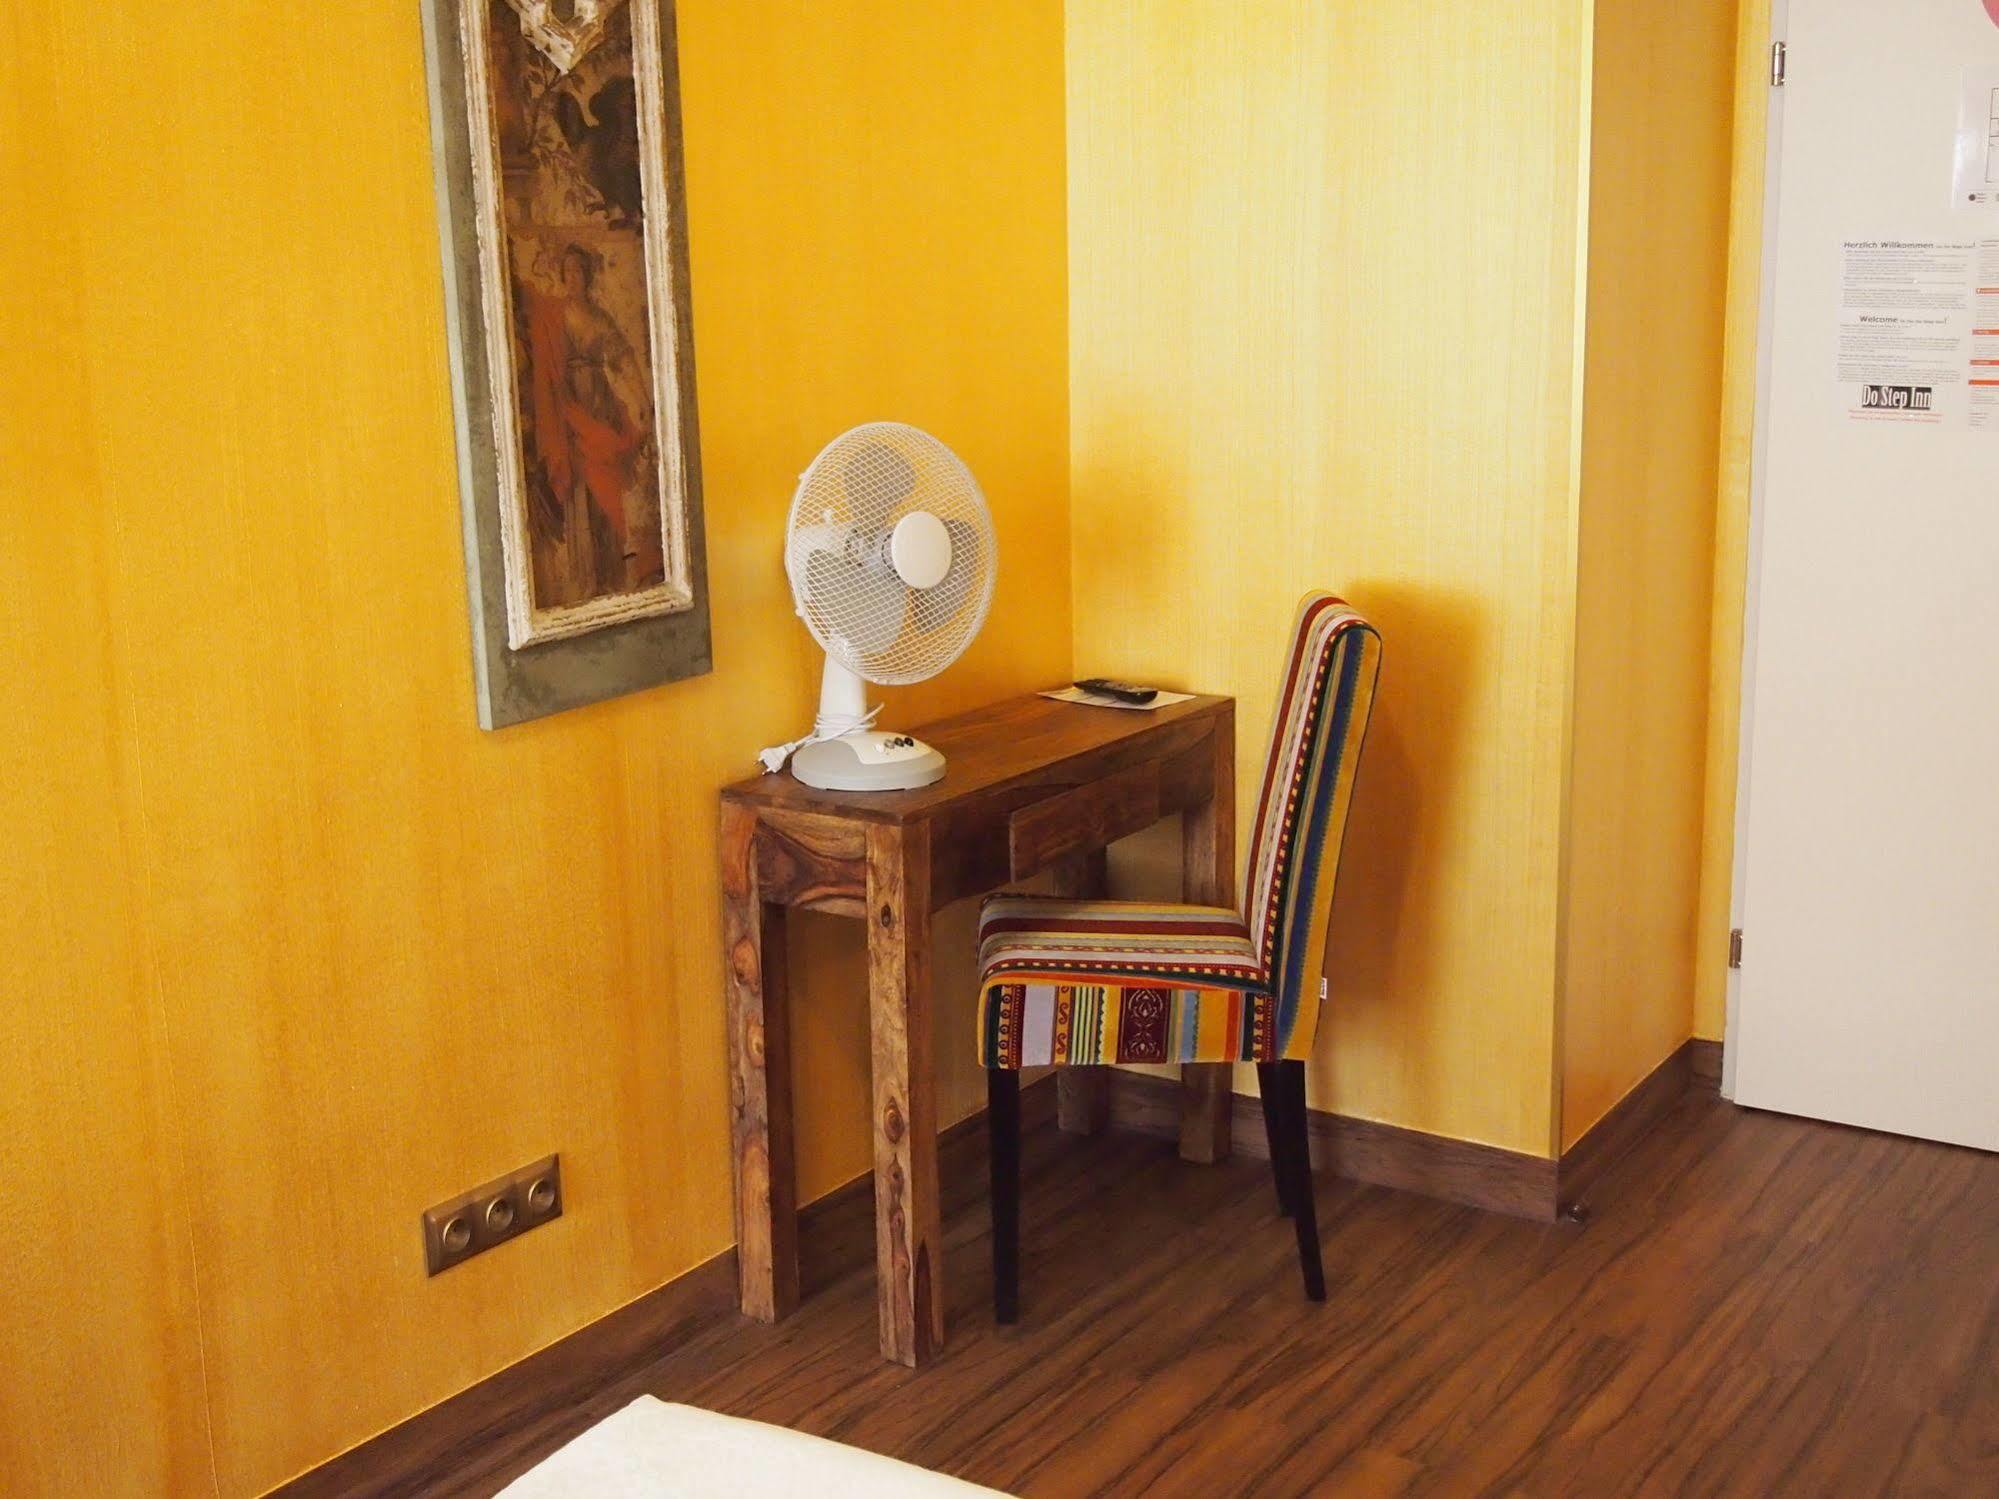 Do Step Inn Home - Hotel & Hostel เวียนนา ภายนอก รูปภาพ